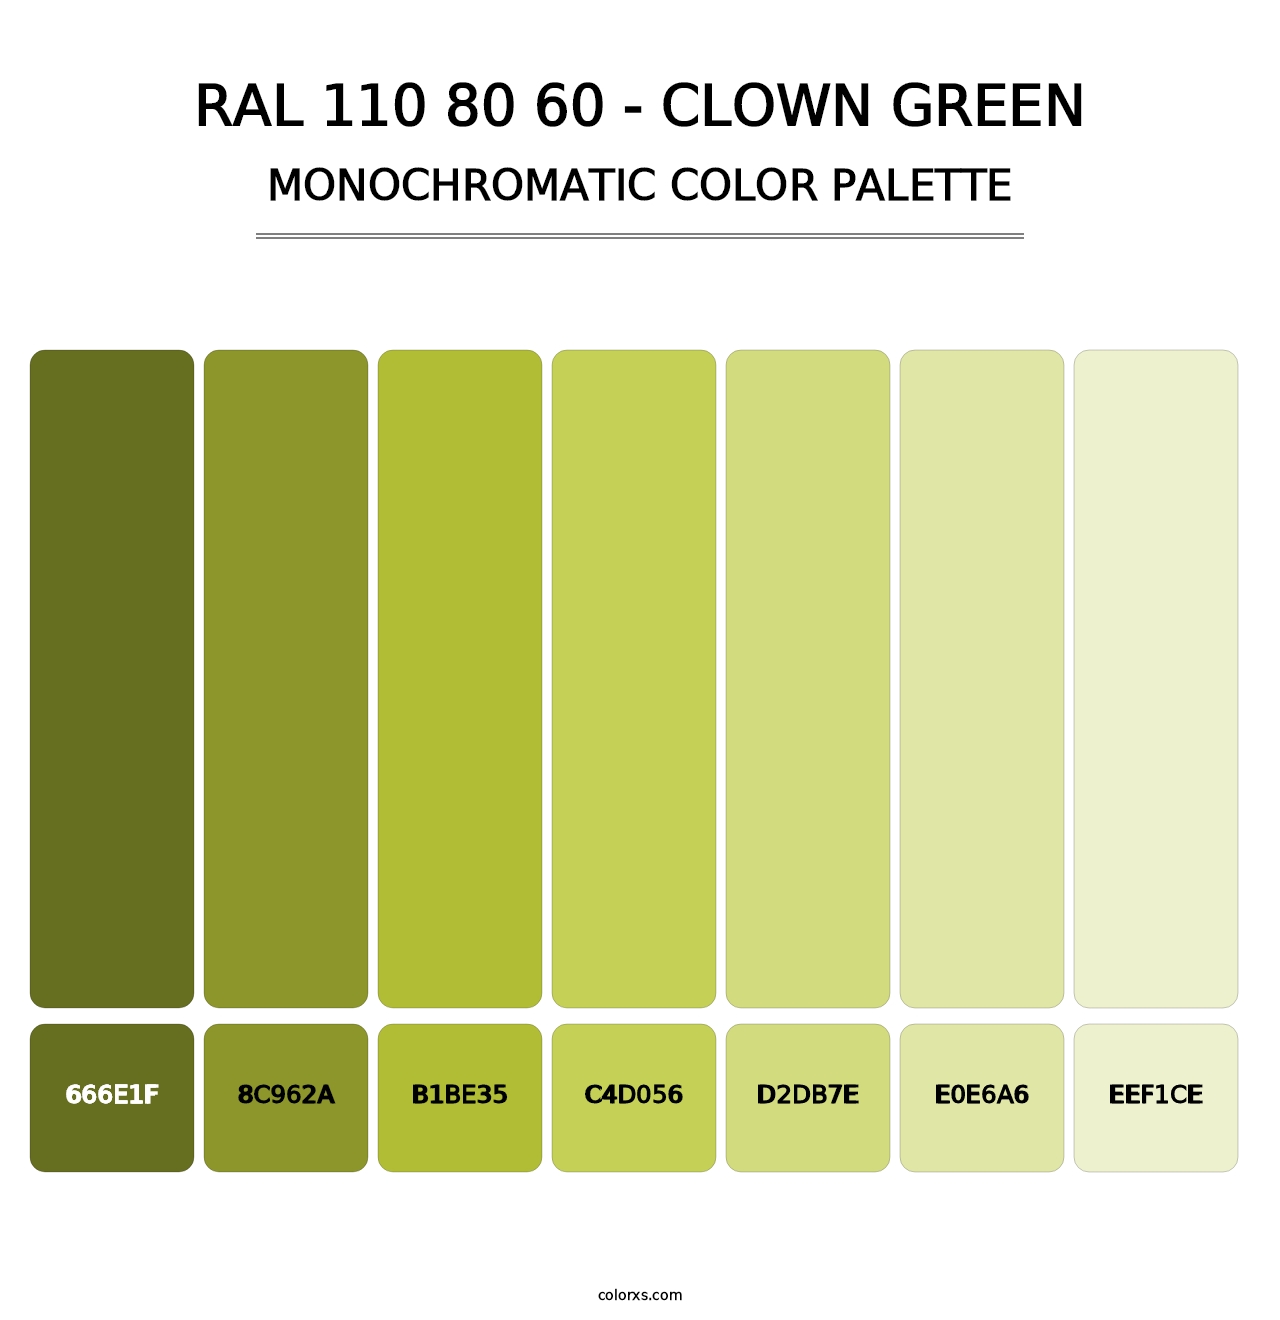 RAL 110 80 60 - Clown Green - Monochromatic Color Palette